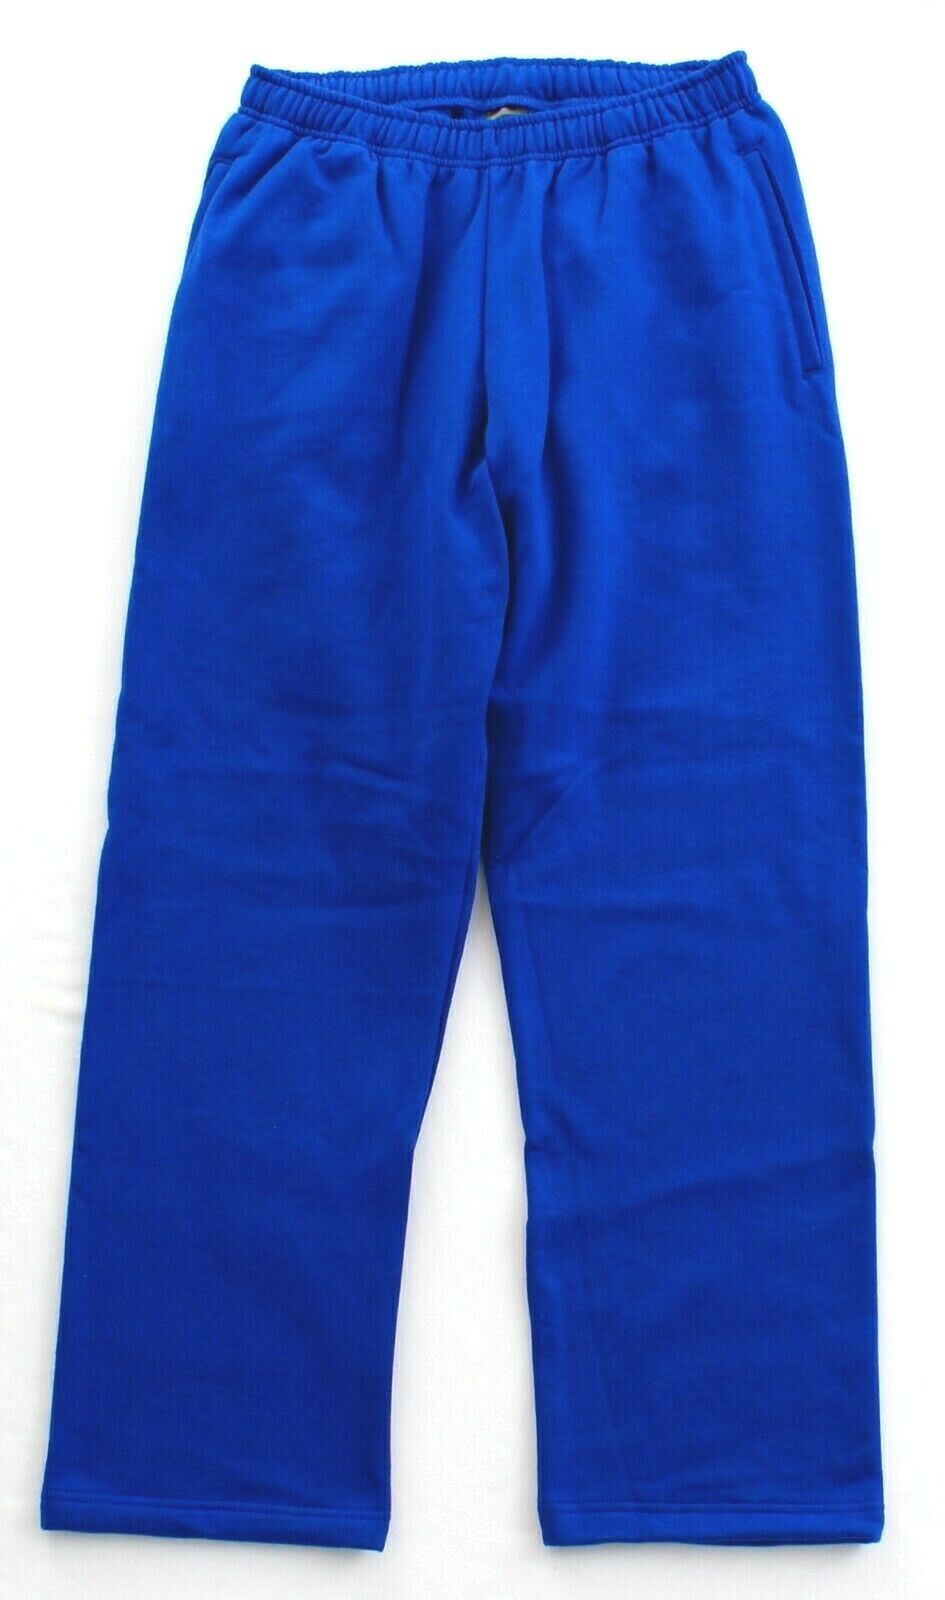 Adidas Royal Blue Sweatpants Sweat Pants Men's NWT - Pants